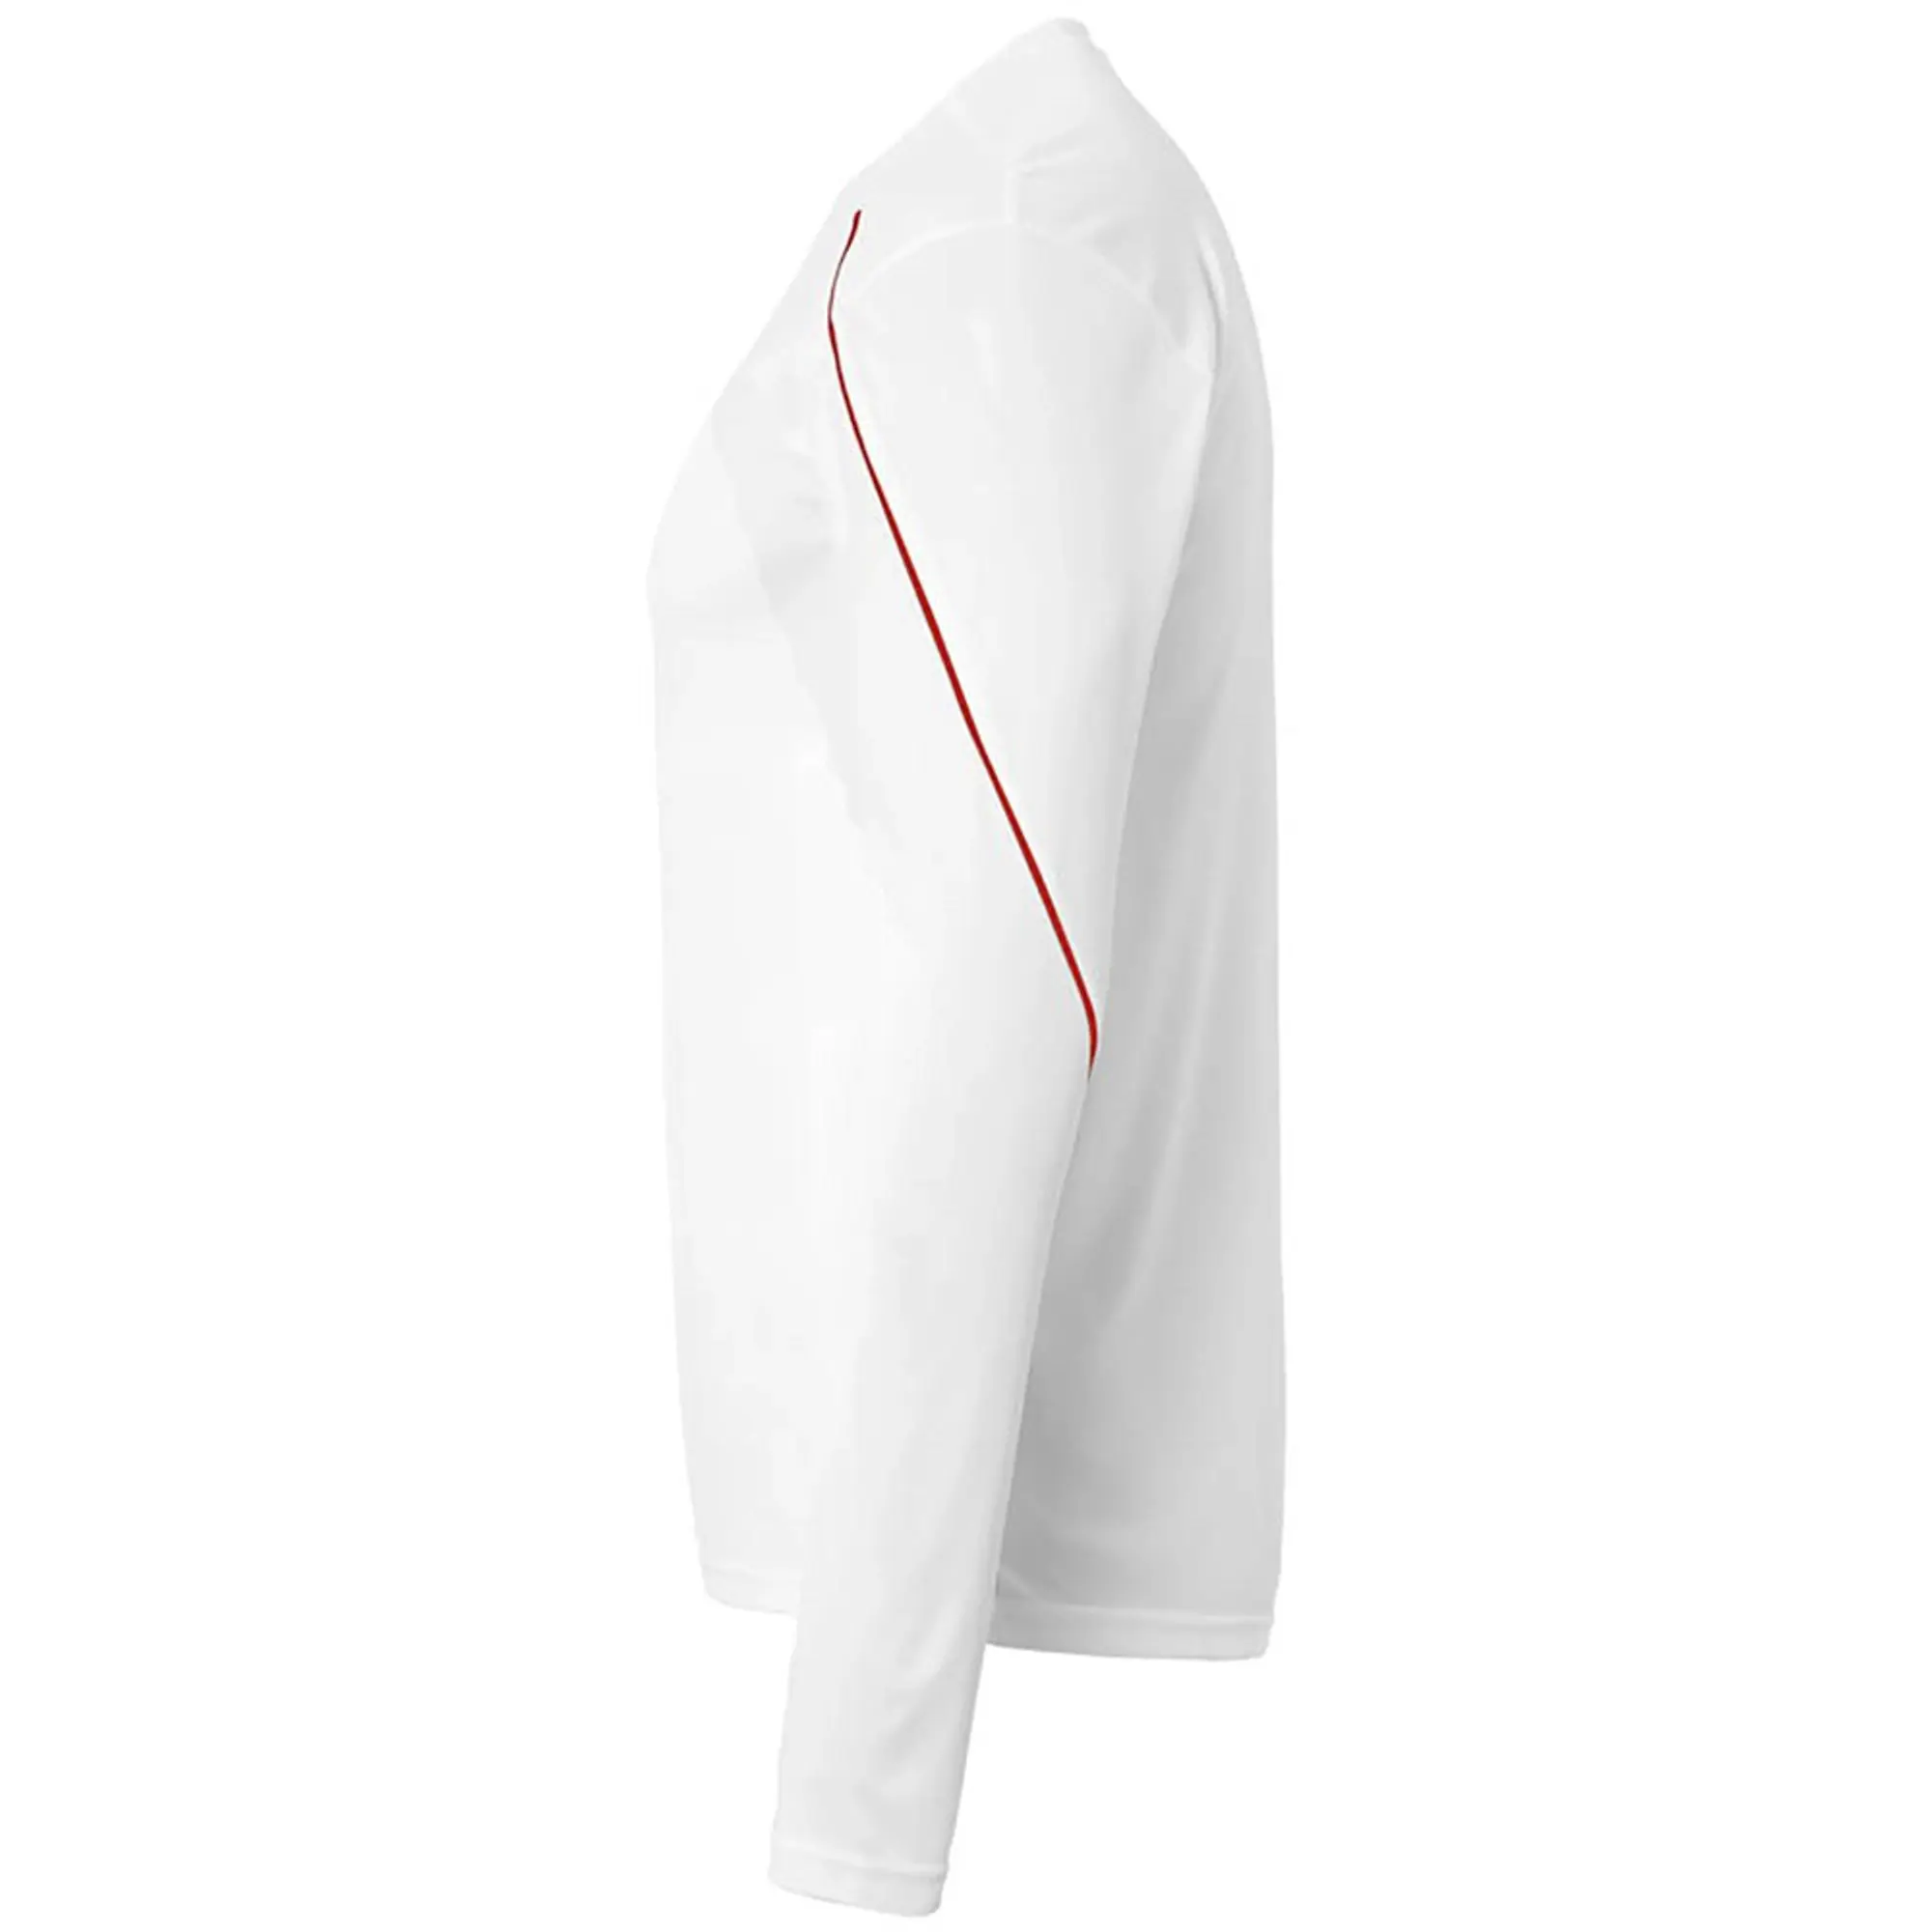 Uhlsport Stream 22 Long Sleeve T-shirt  - White